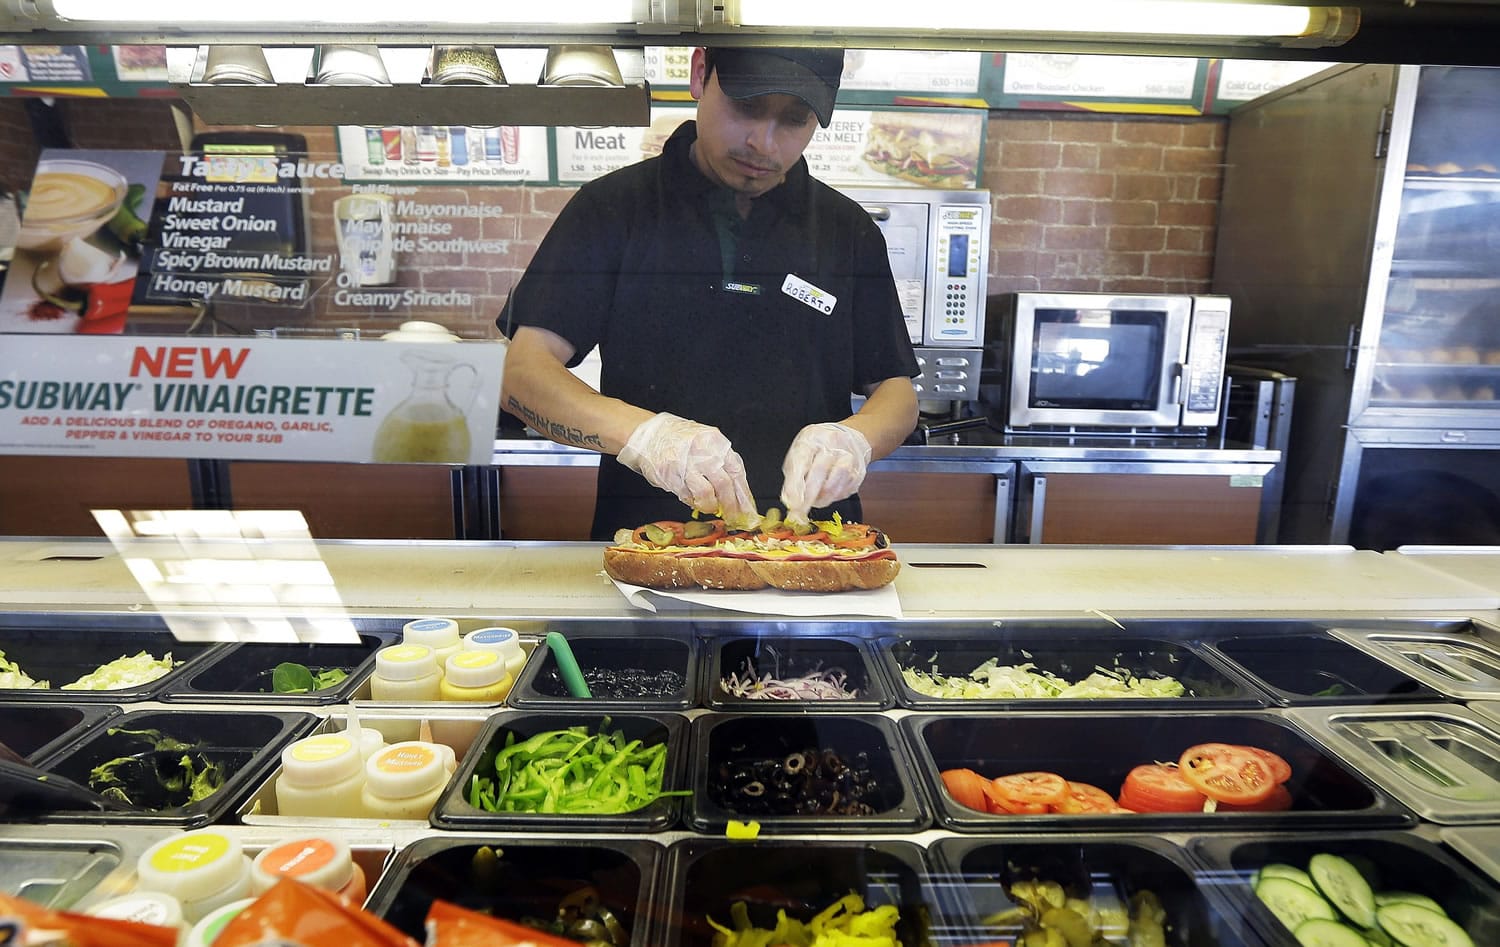 Roberto Castelan makes a sandwich at a Subway sandwich franchise in Seattle.